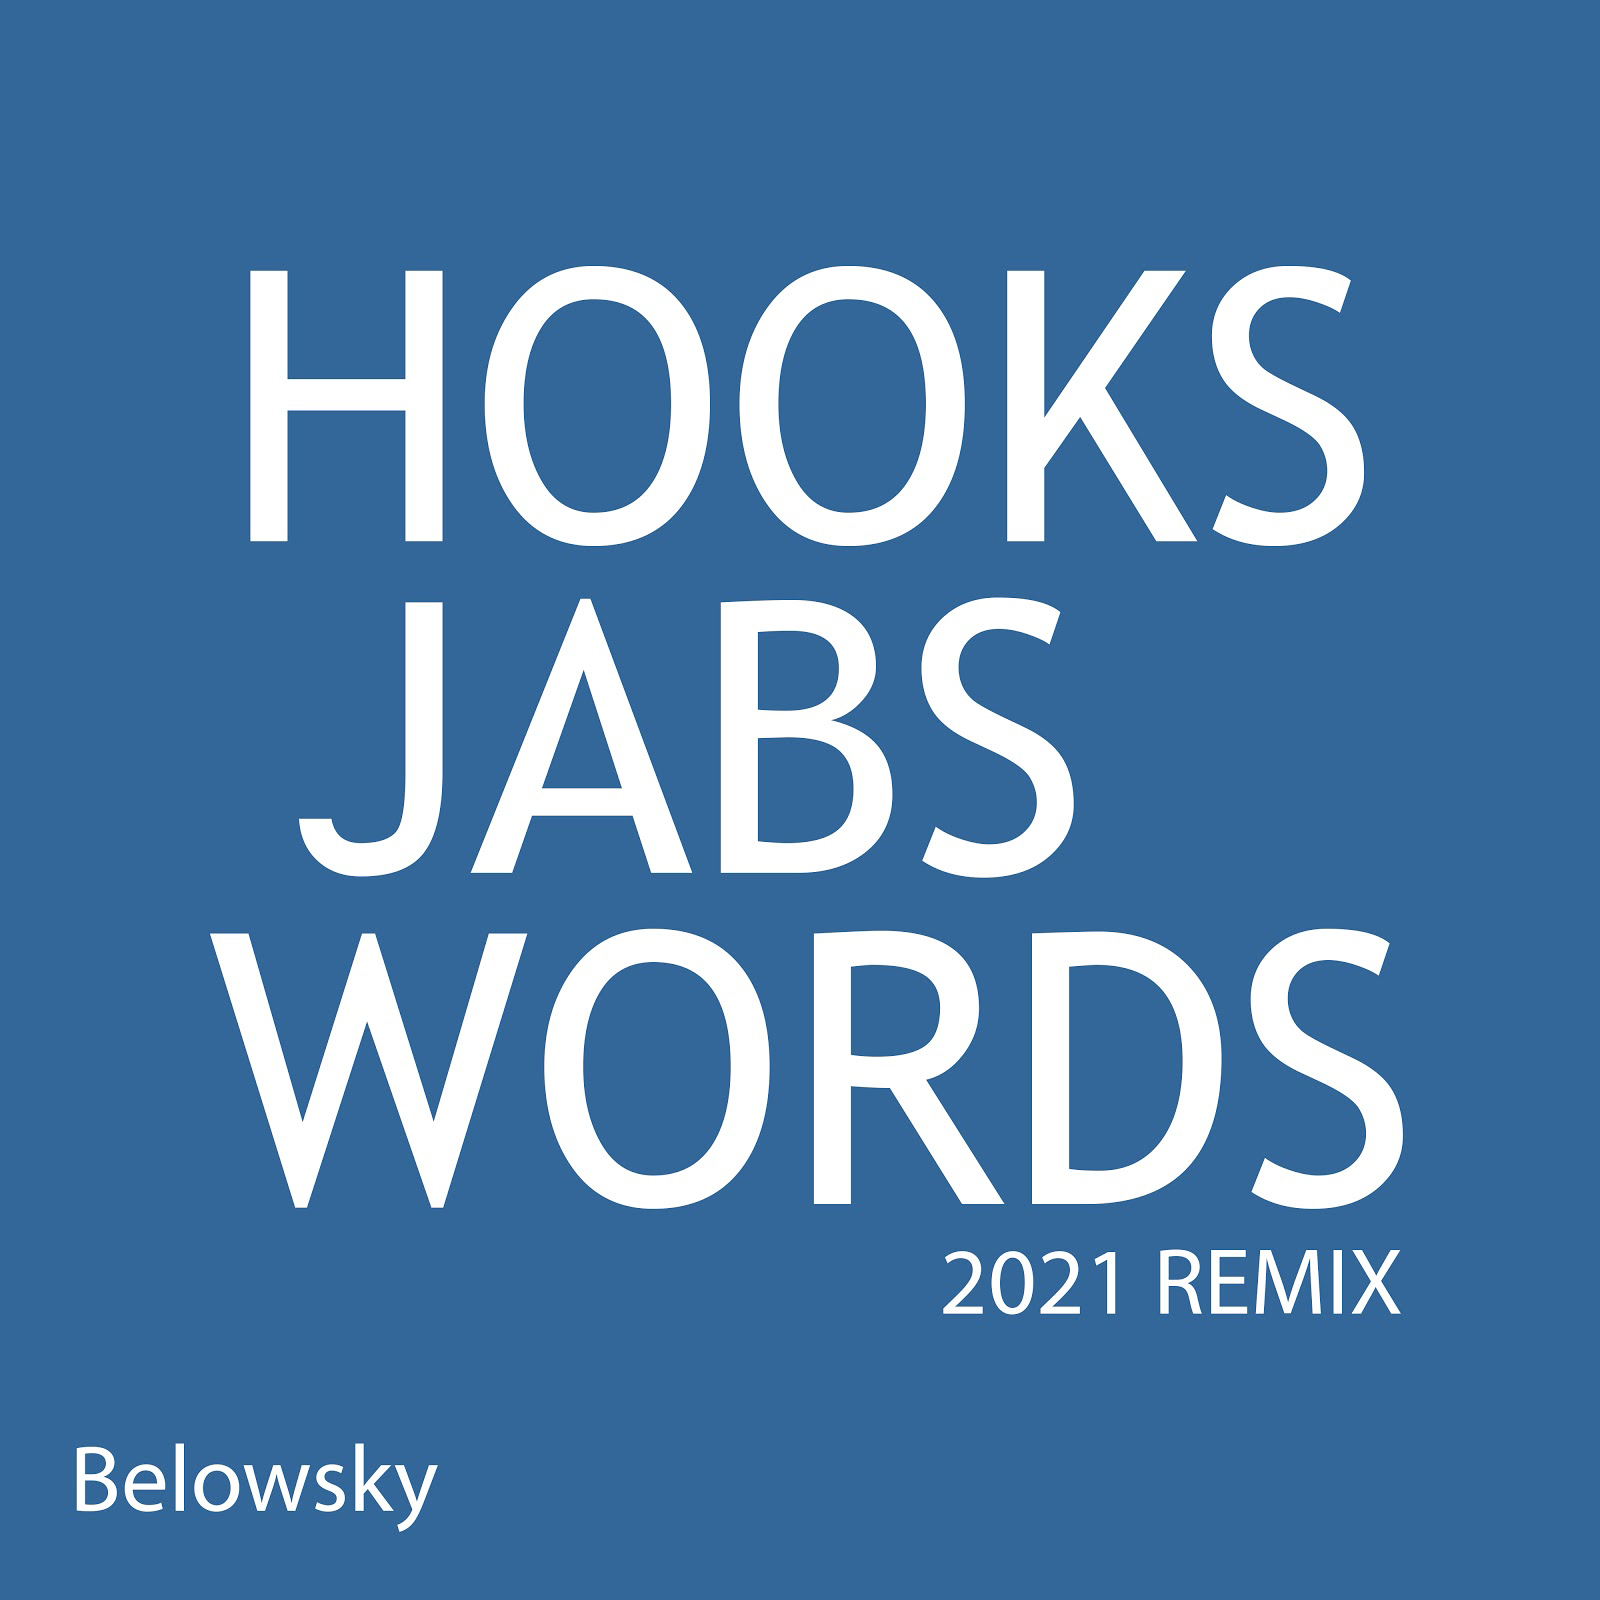 BELOWSKY vs. DANNY SABER - Face Off In New Single 'Hooks Jabs Words' 